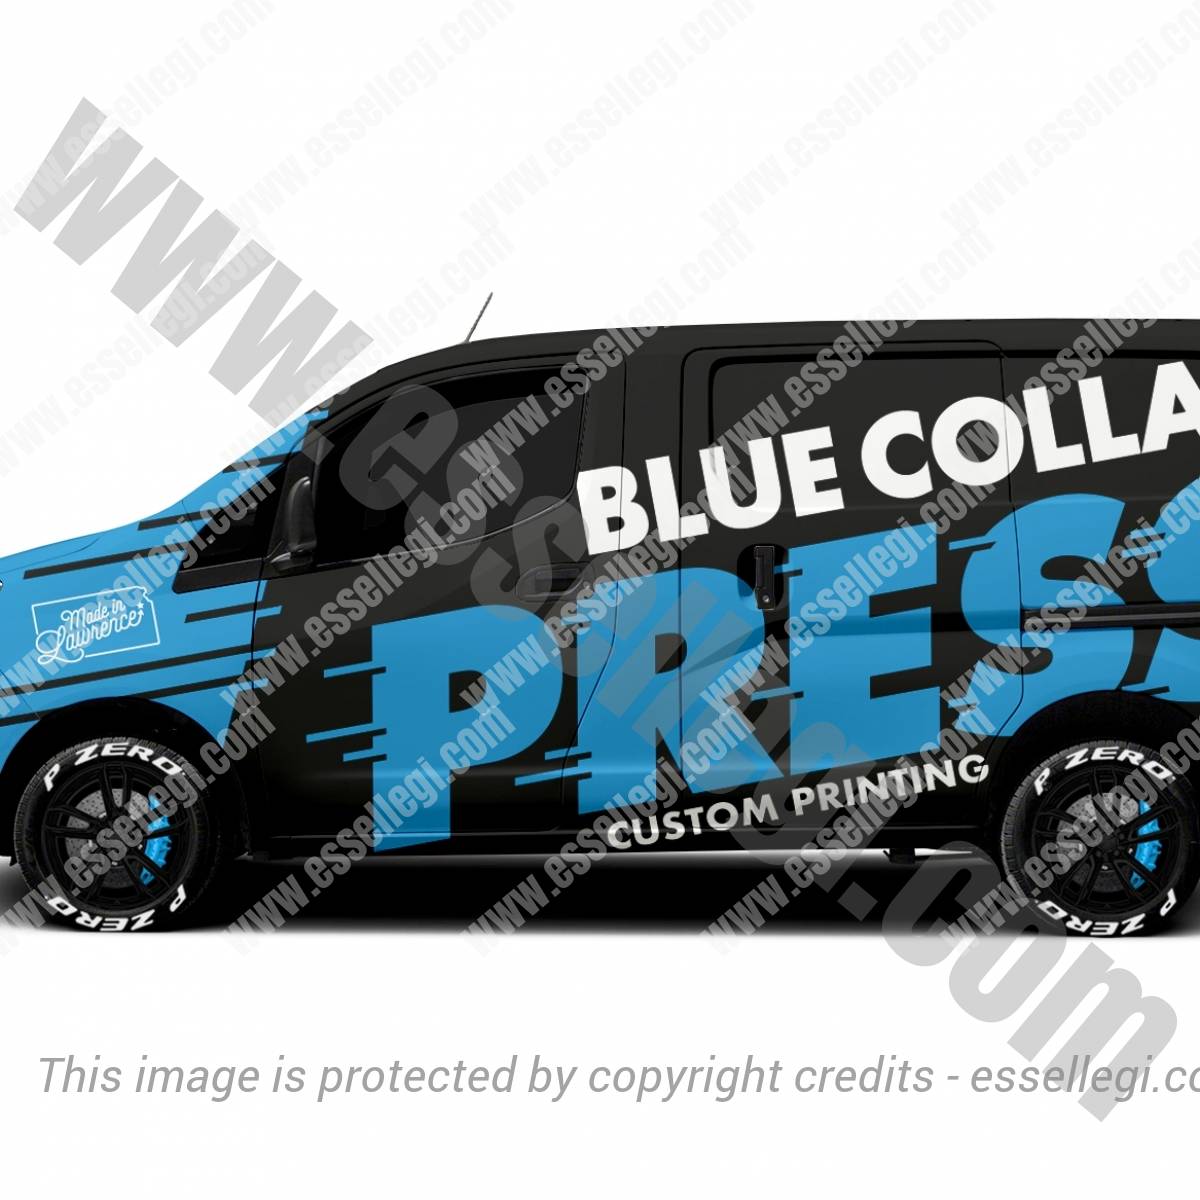 BLUE COLLAR PRESS | VAN WRAP DESIGN 🇺🇸